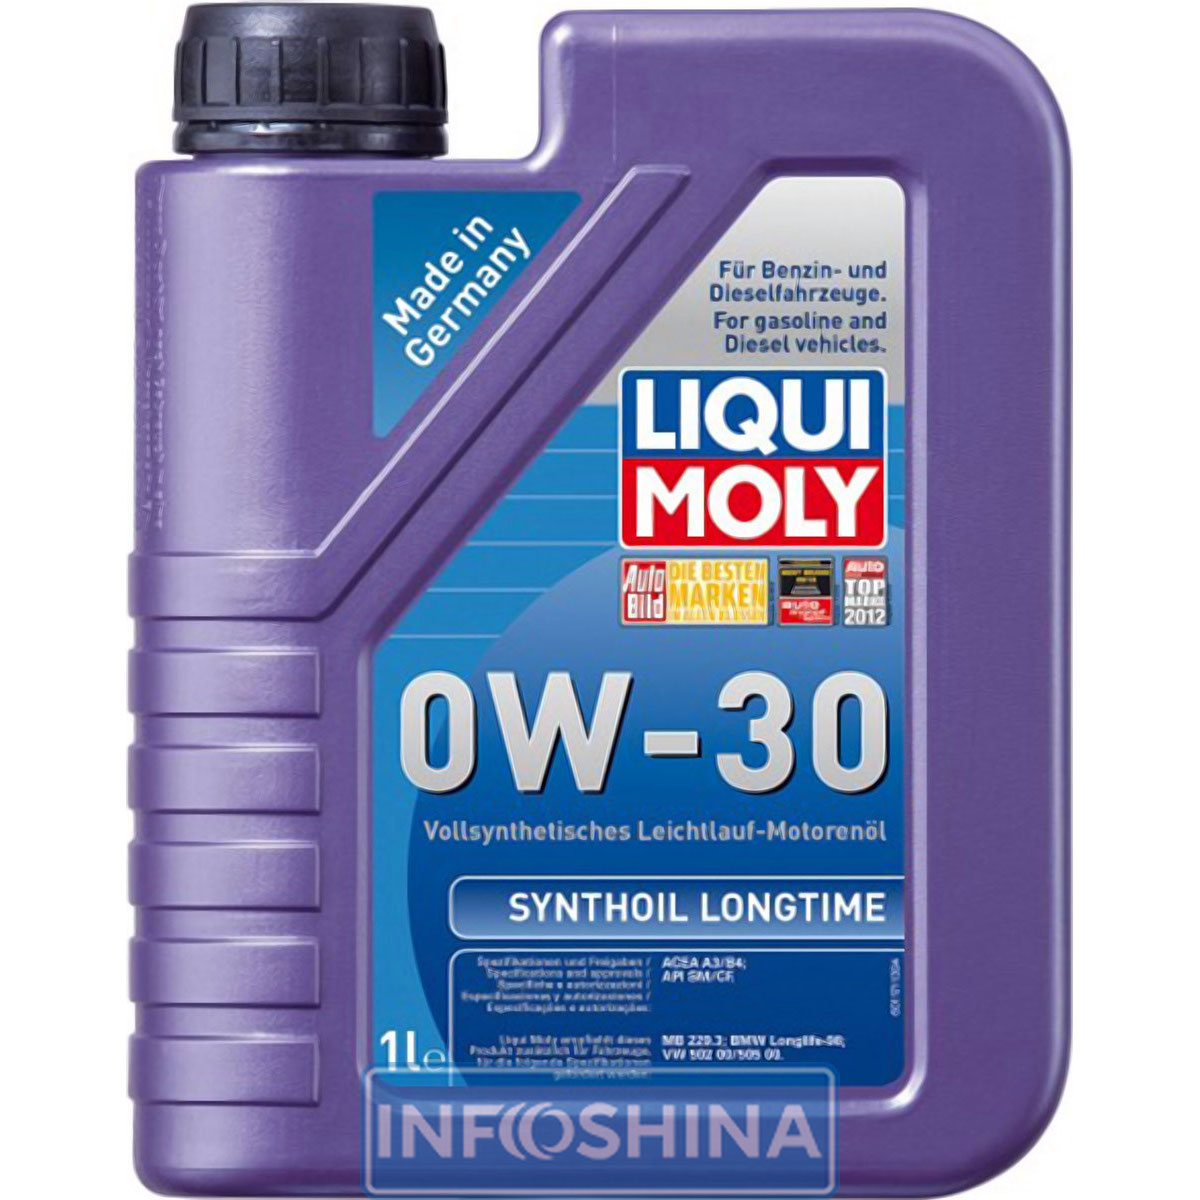 Купить масло Liqui Moly Synthoil Longtime 0W-30 (1л)